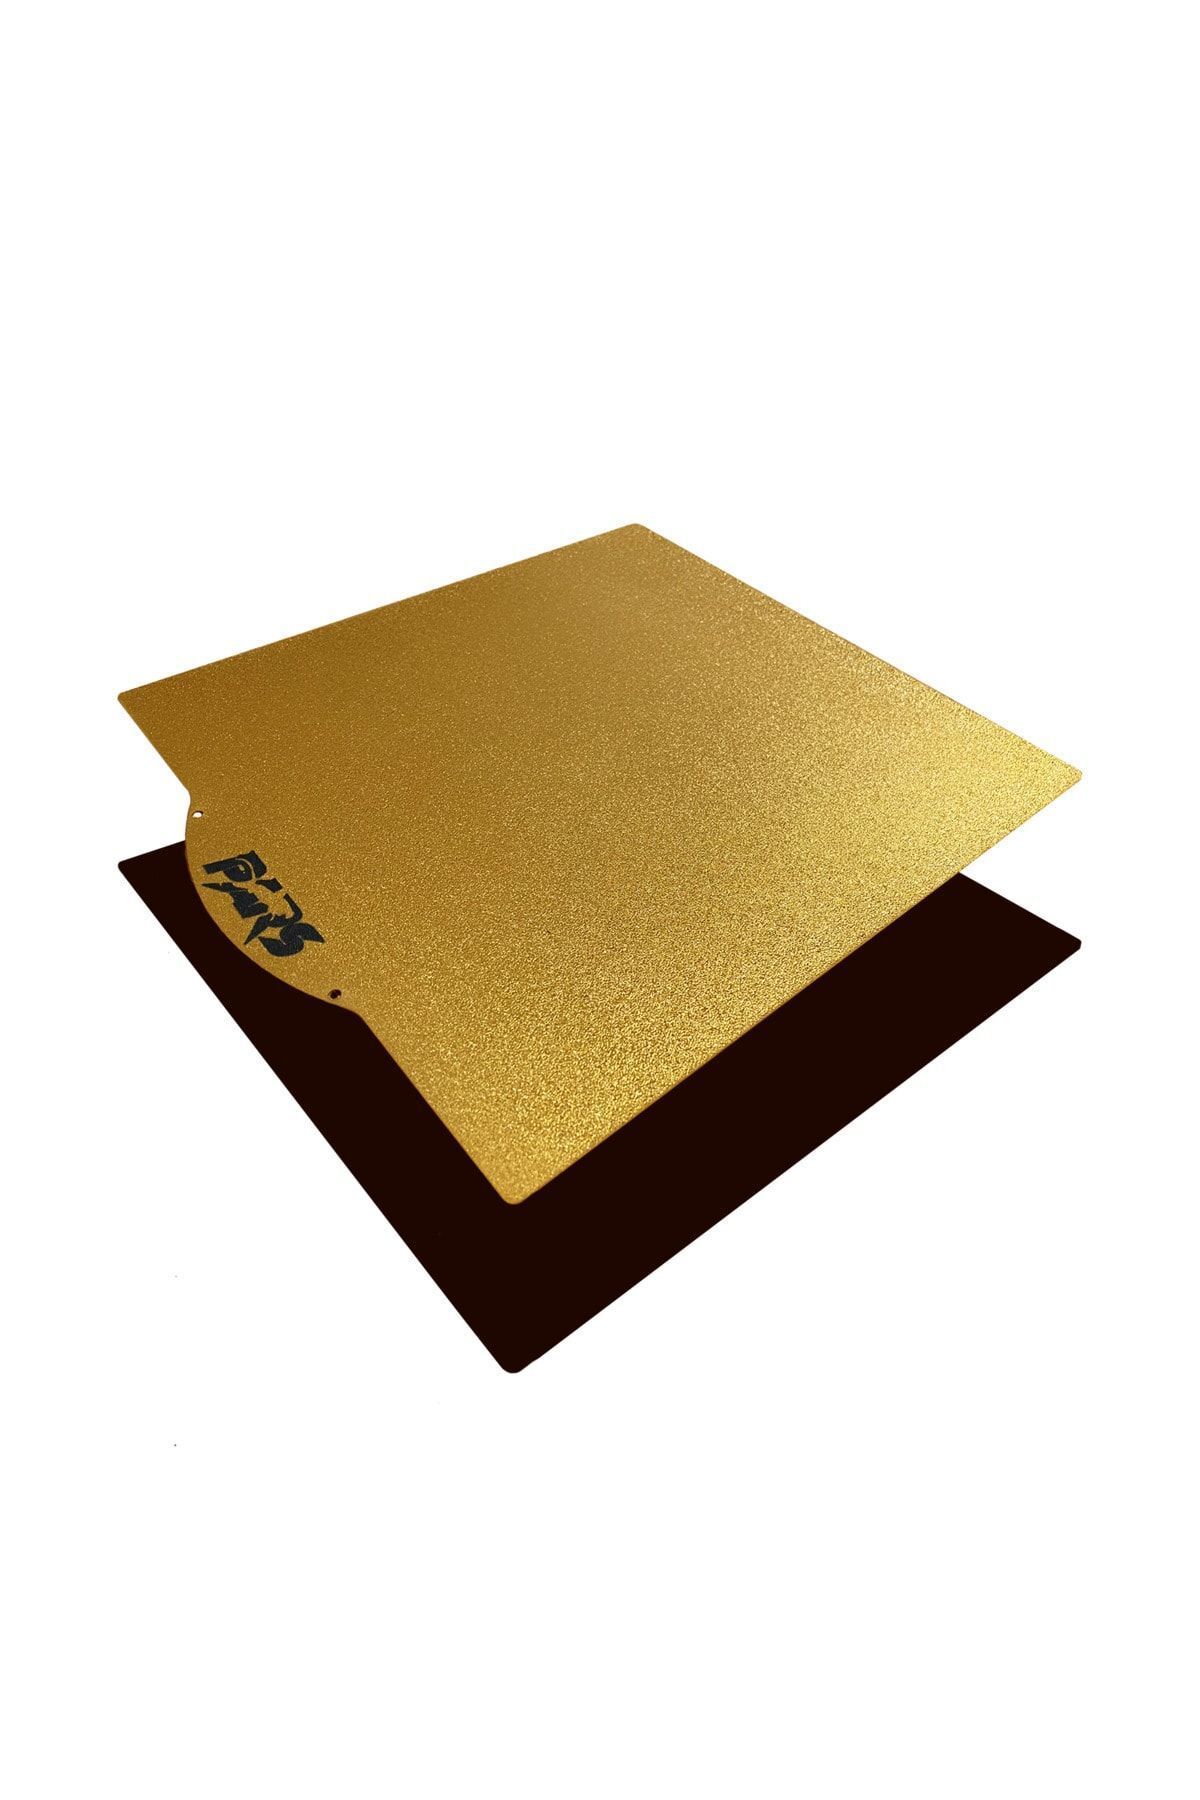 Pars 250x250 MM Pars Gold Pei Kaplı Özel Yay Çeliği Tabla Magnetli